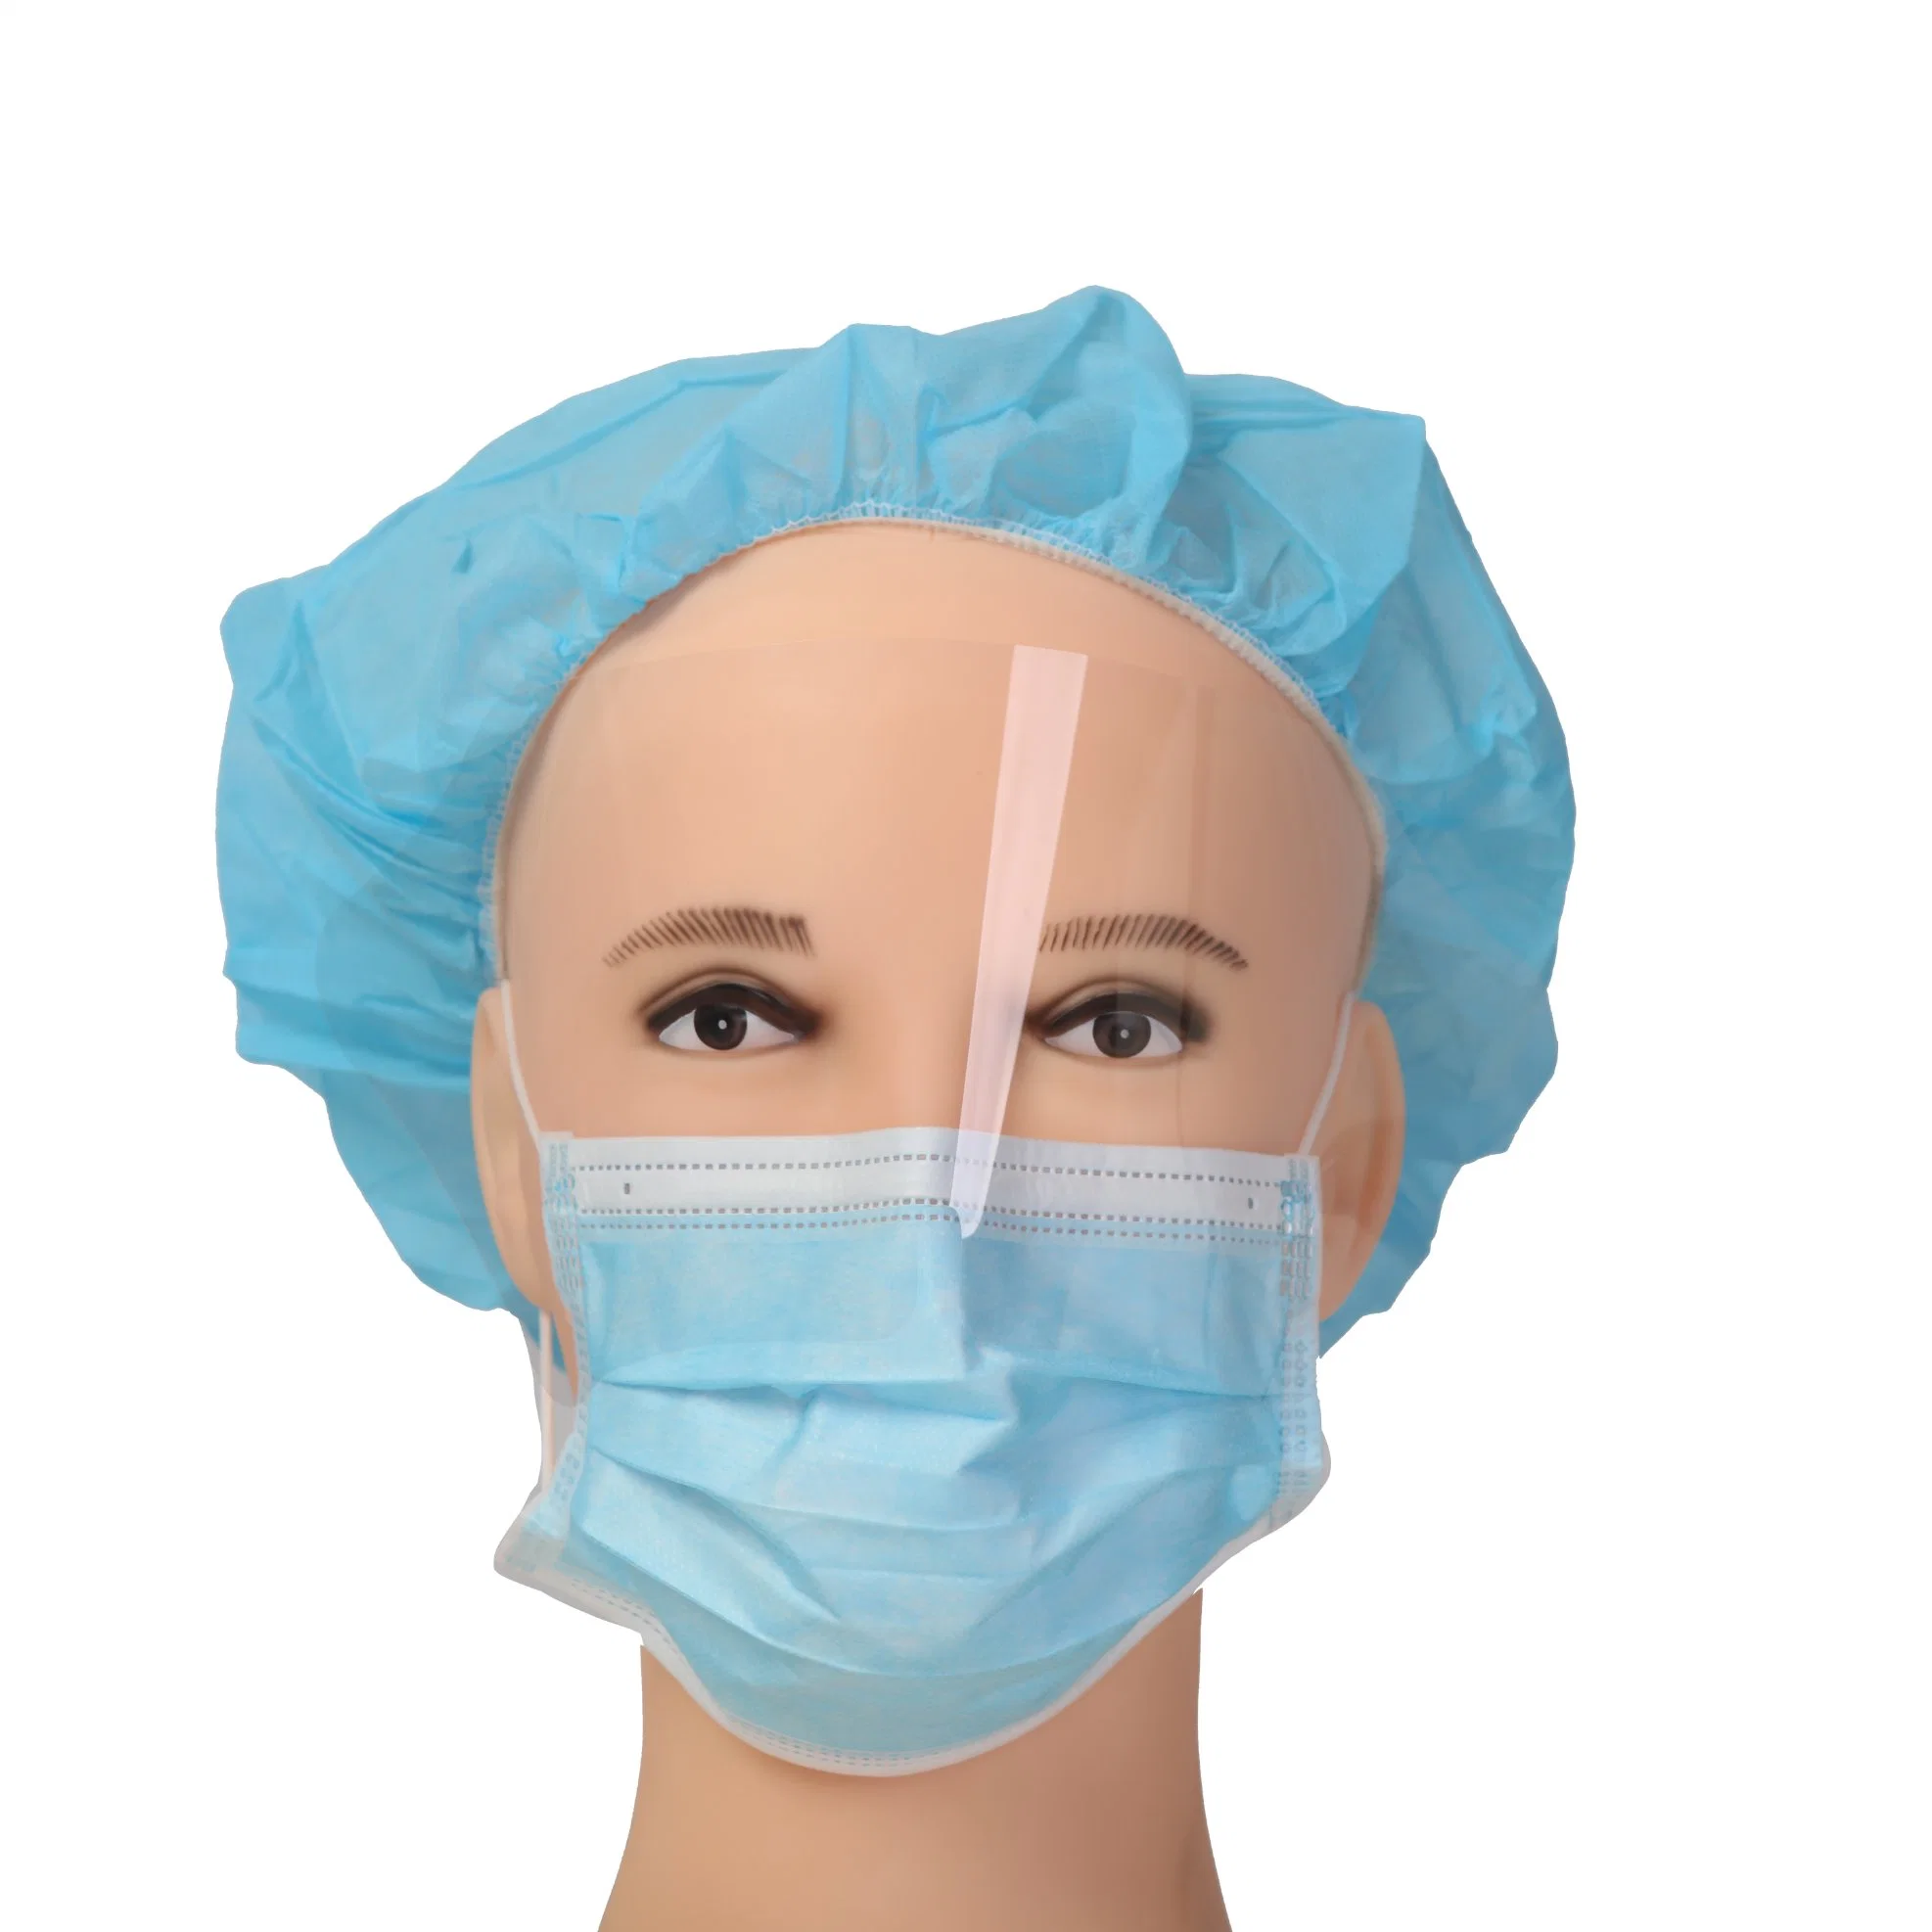 Grossista tipo IIR descartável, não tecido 3 Ply face cirúrgica Máscara com máscara facial Shield Medical